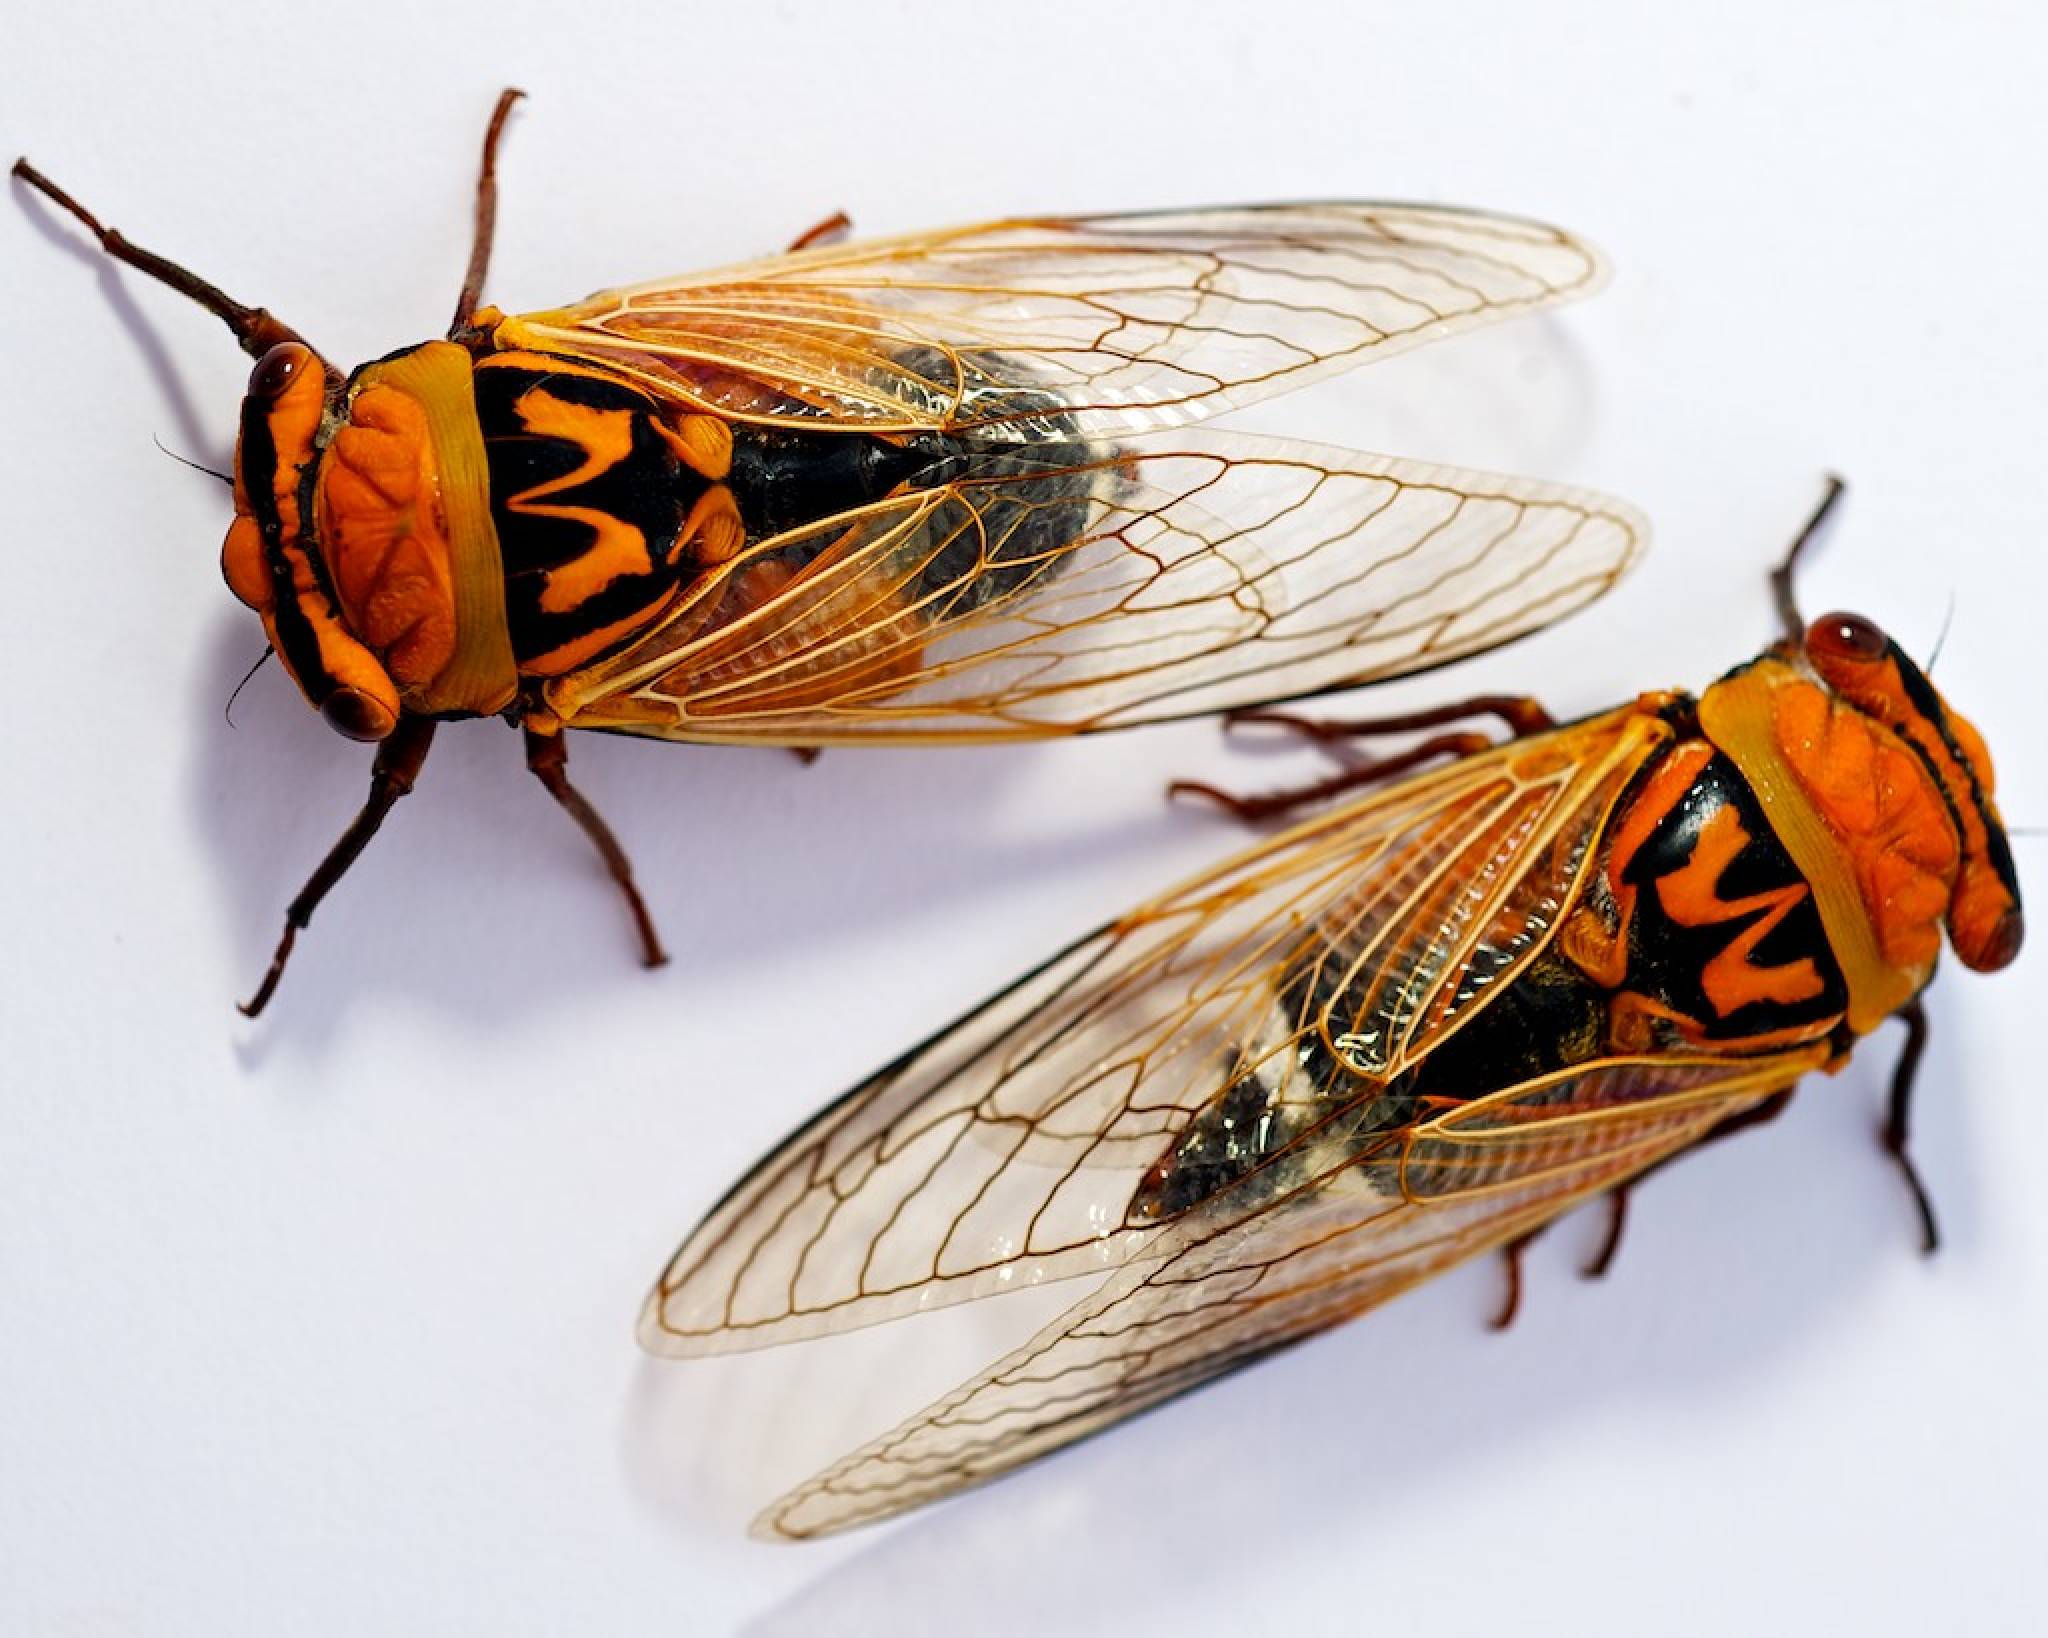 Australian Cicadas